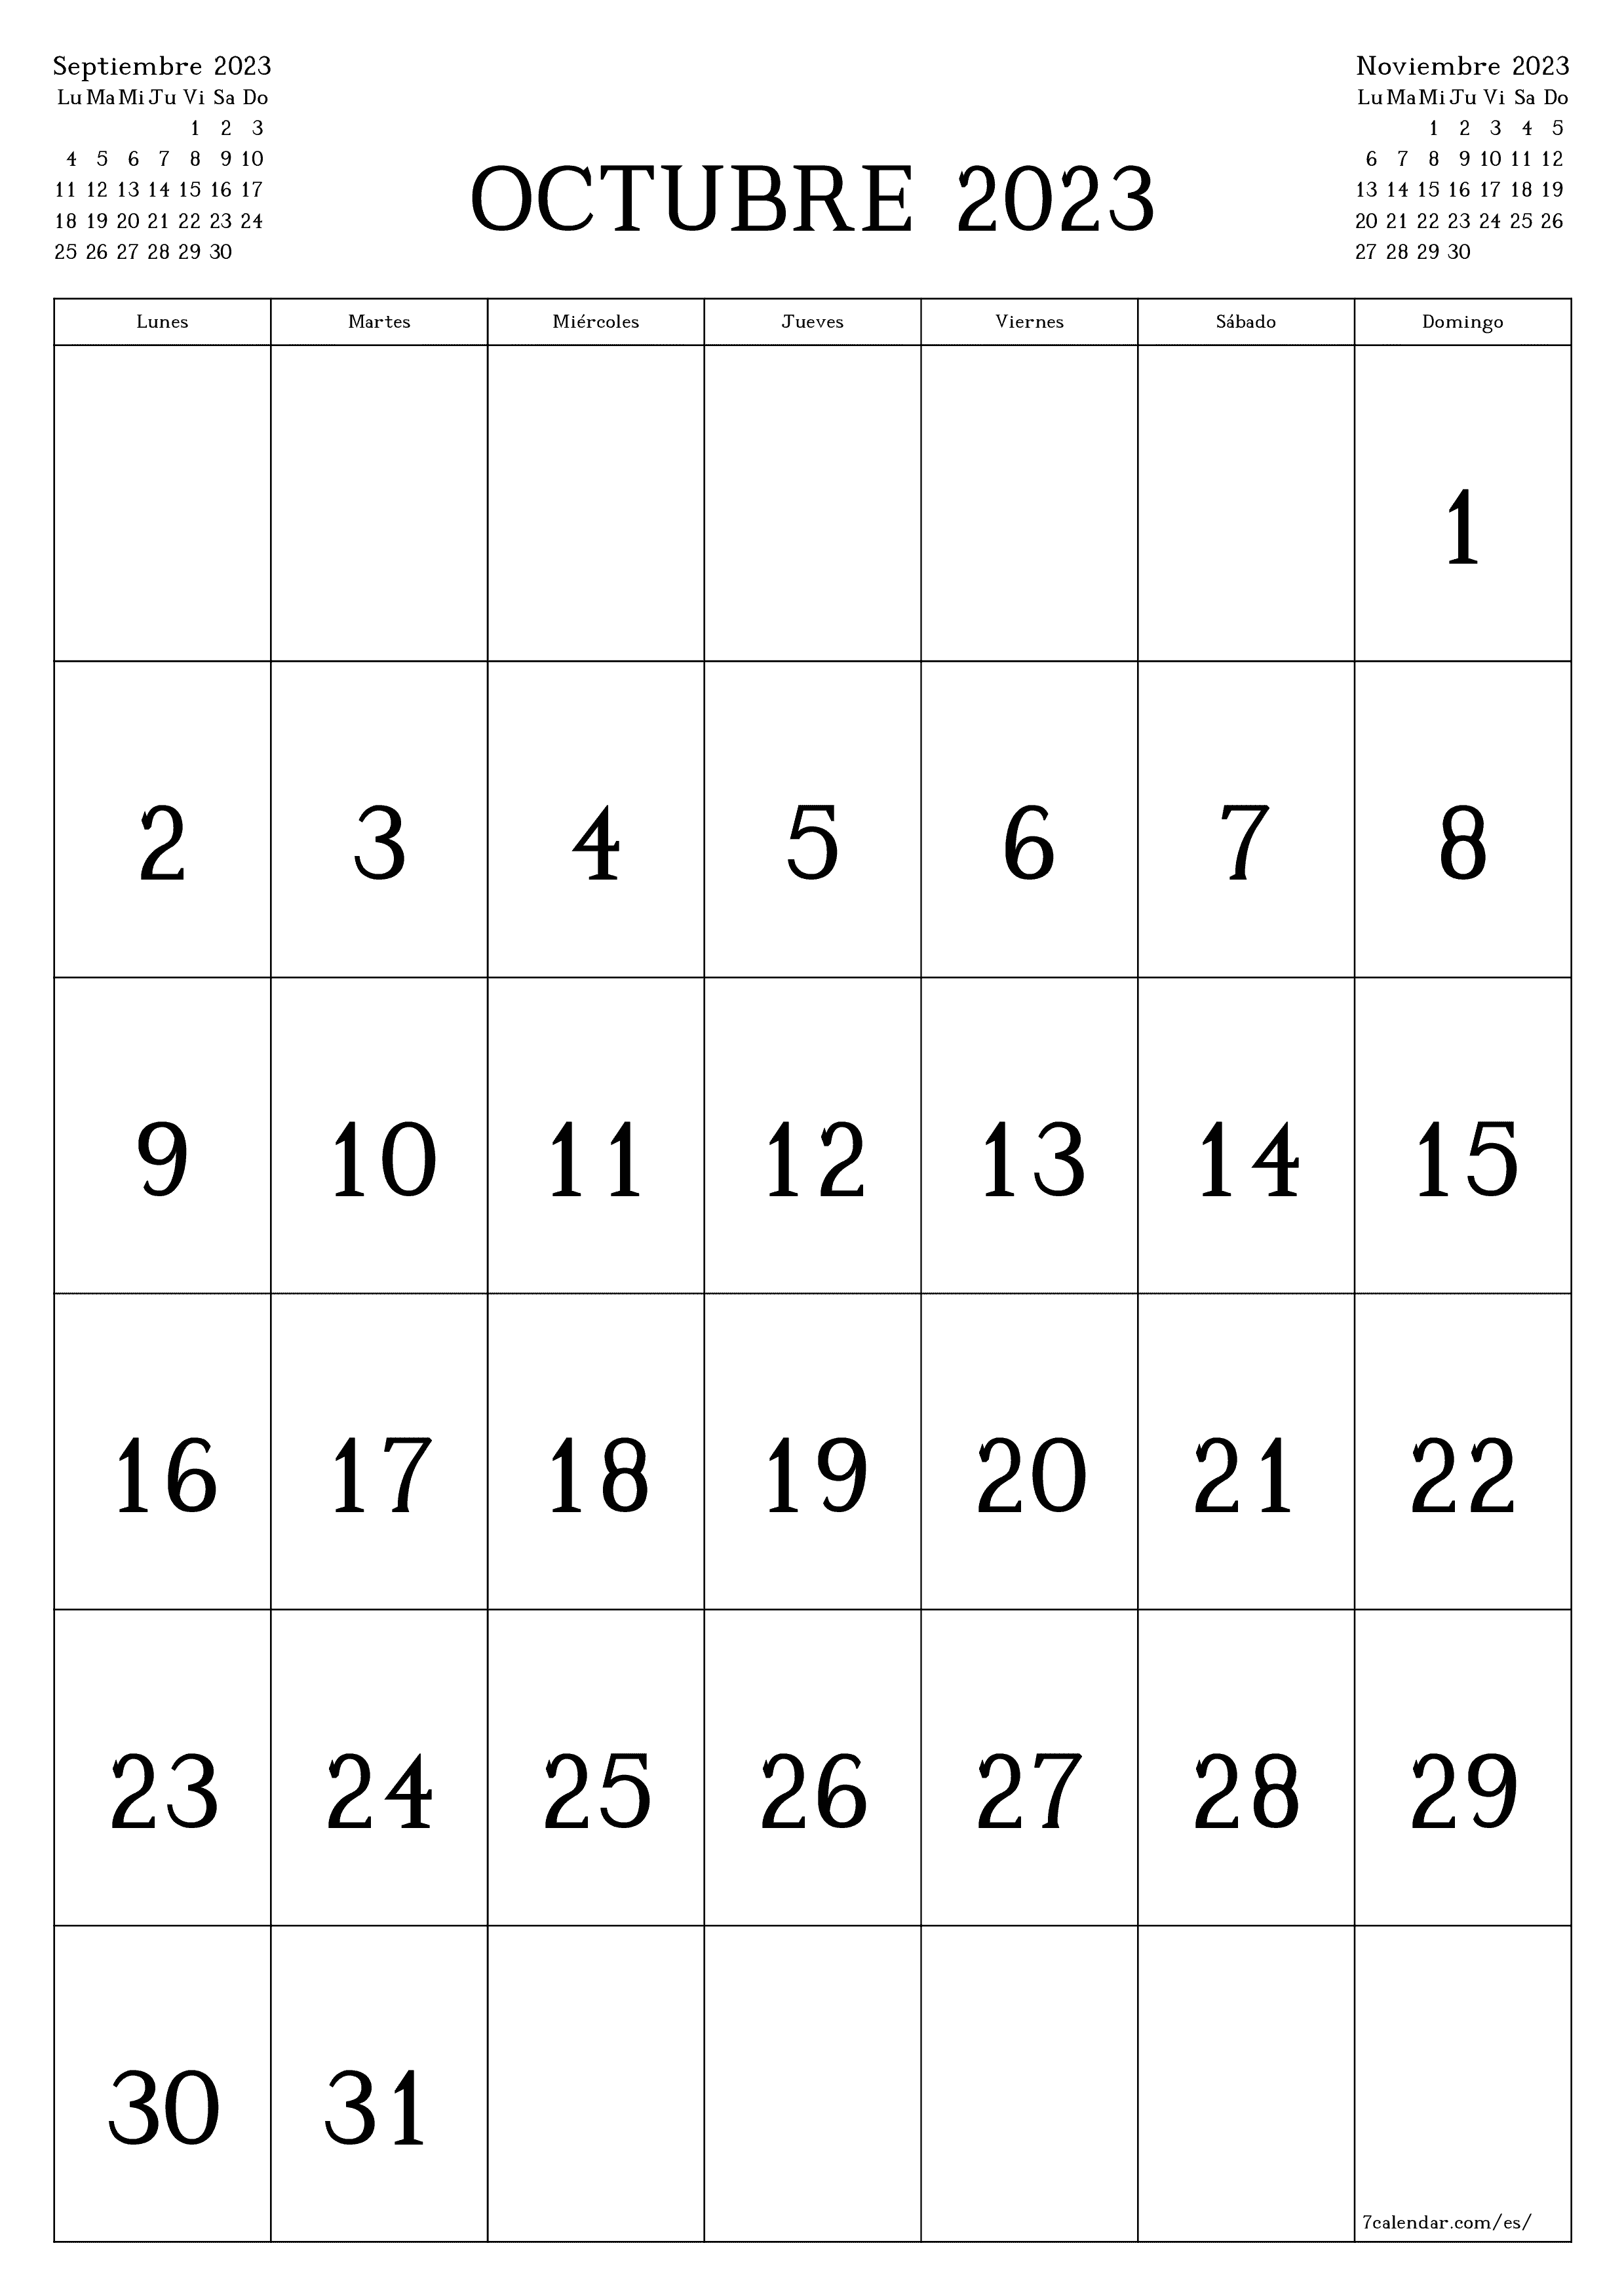 Calendario mensual en blanco para el mes Octubre 2023 guardar e imprimir en PDF PNG Spanish - 7calendar.com